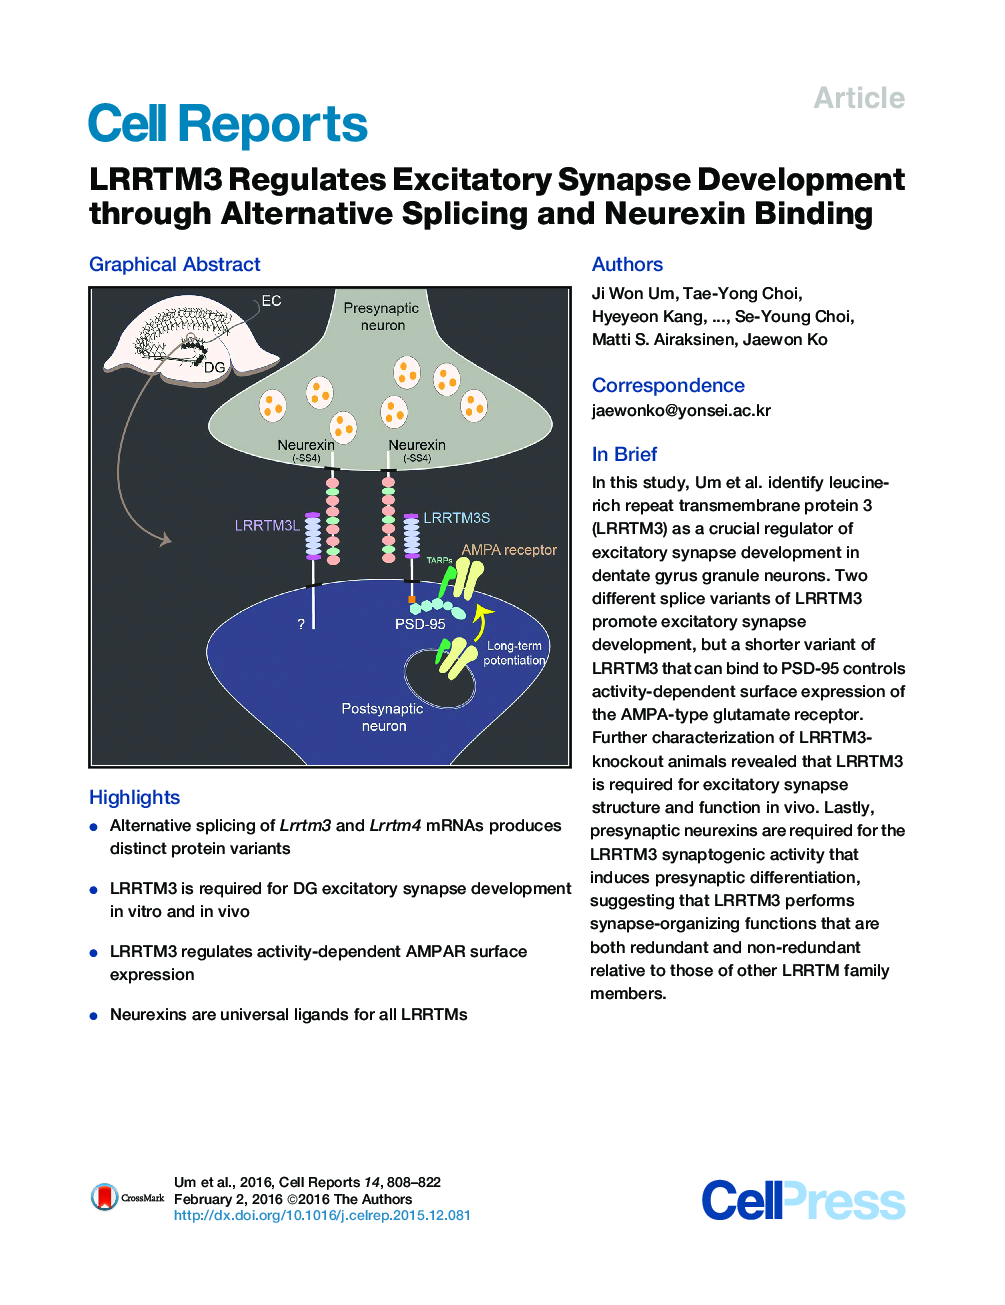 LRRTM3 Regulates Excitatory Synapse Development through Alternative Splicing and Neurexin Binding 